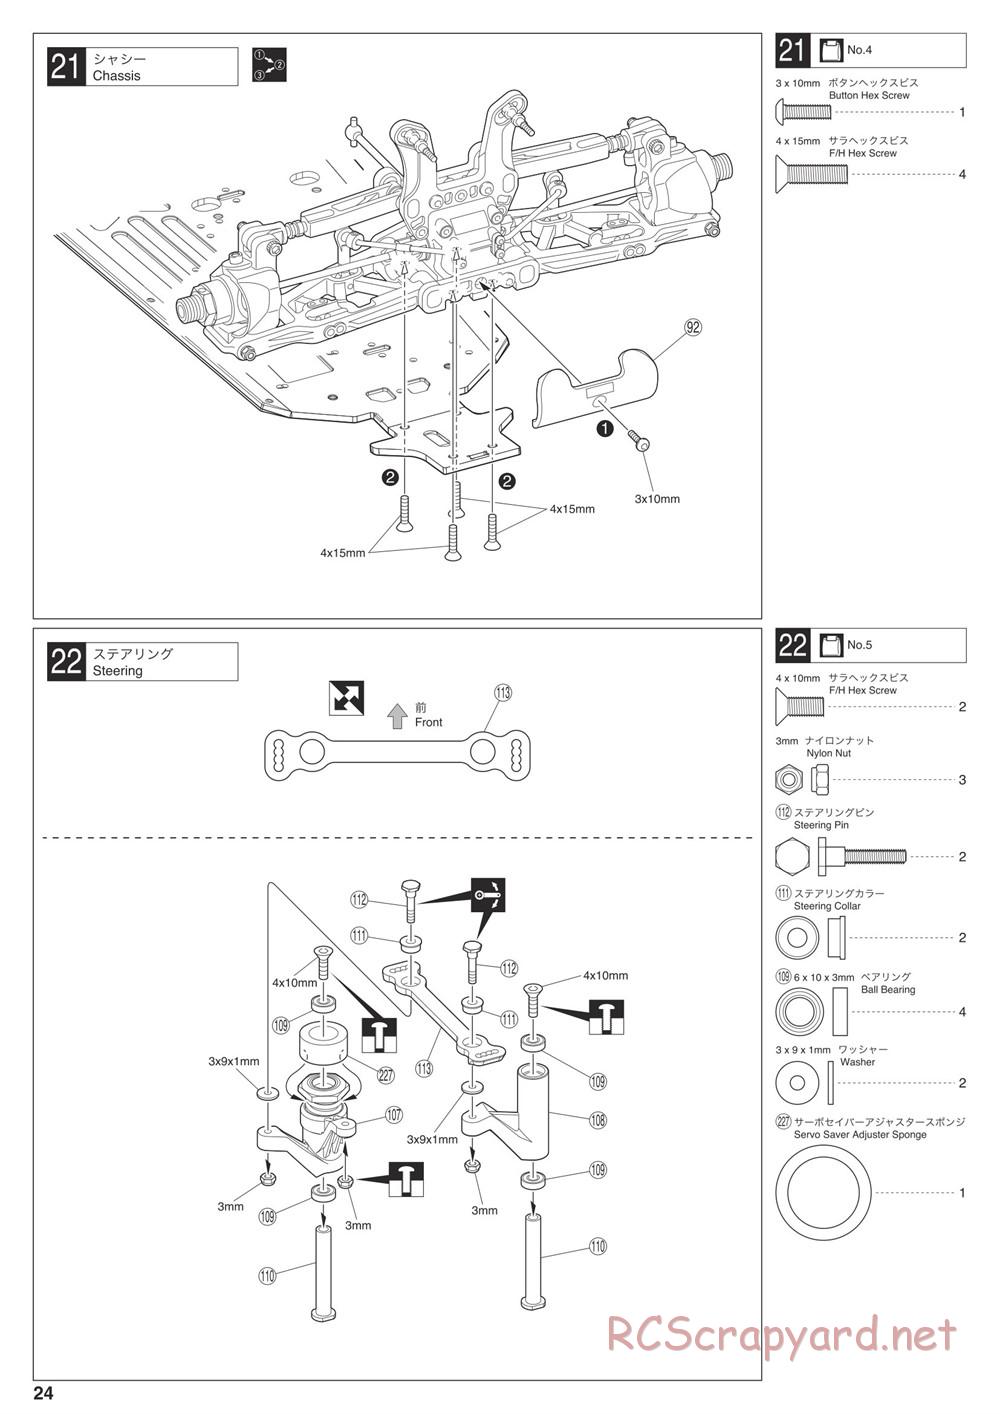 Kyosho - Inferno MP9e Evo - Manual - Page 24